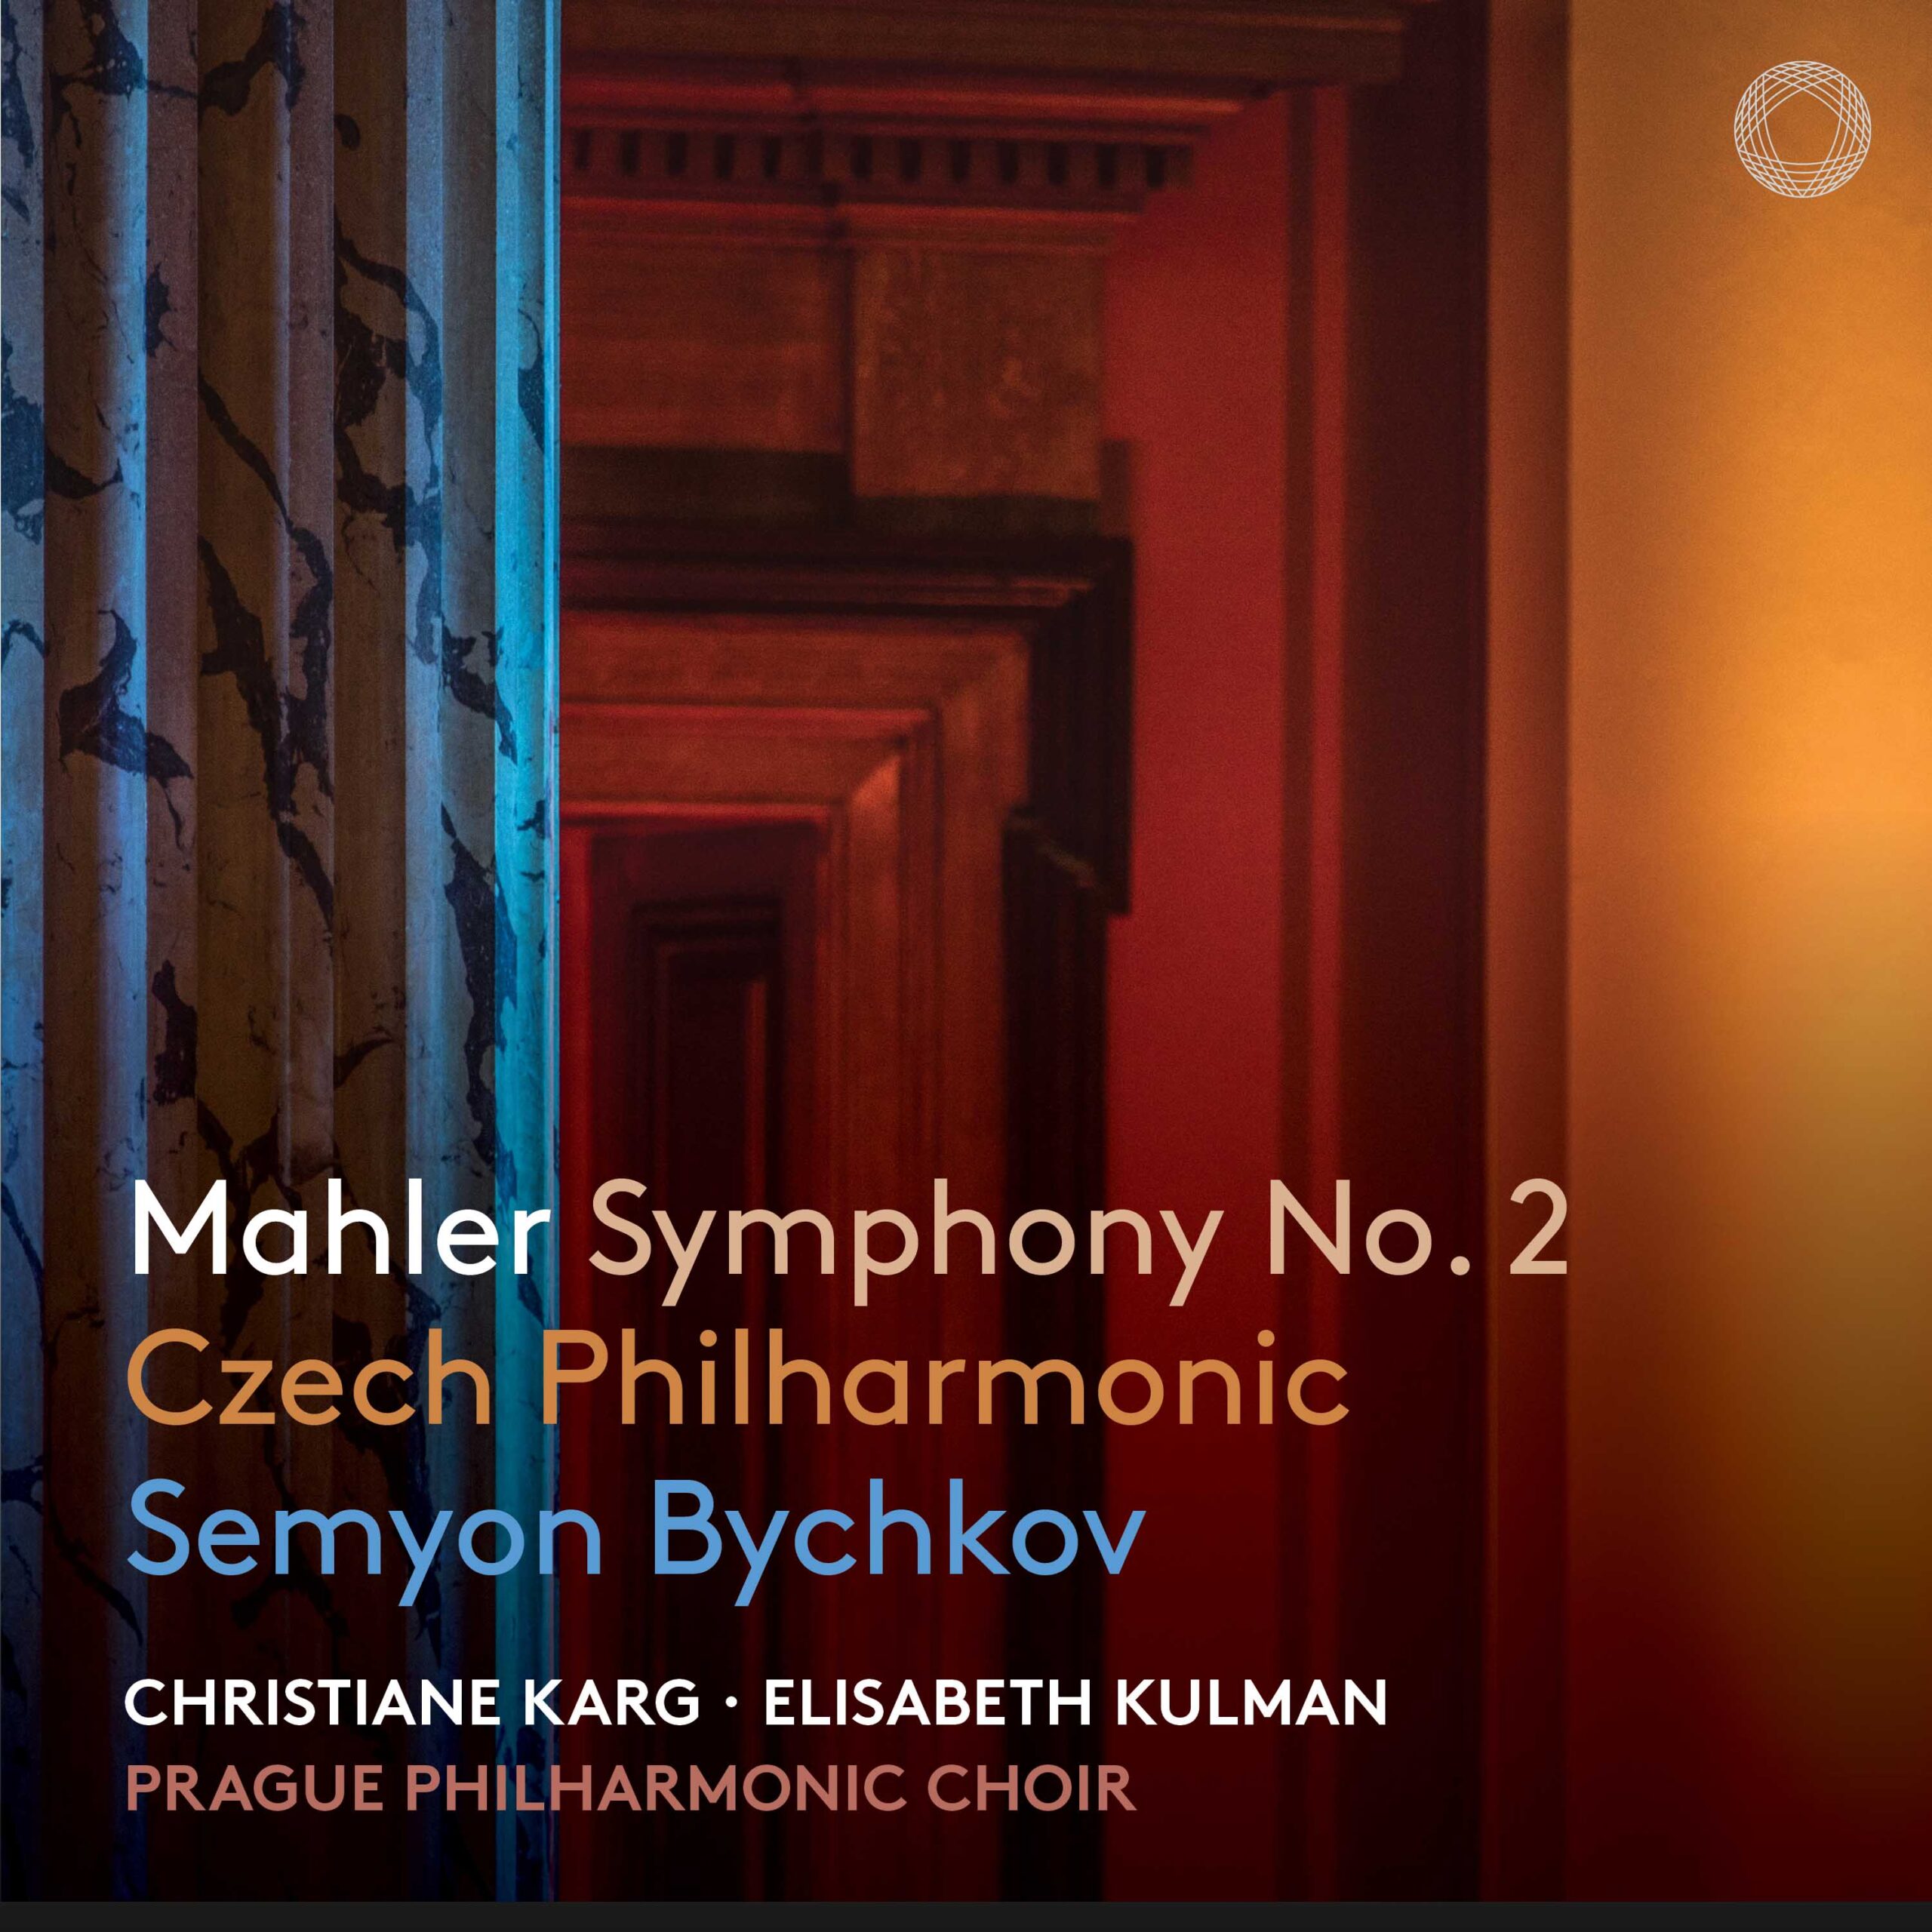 Semyon Bychkov and the Czech Philharmonic Release Mahler’s Symphony No. 2